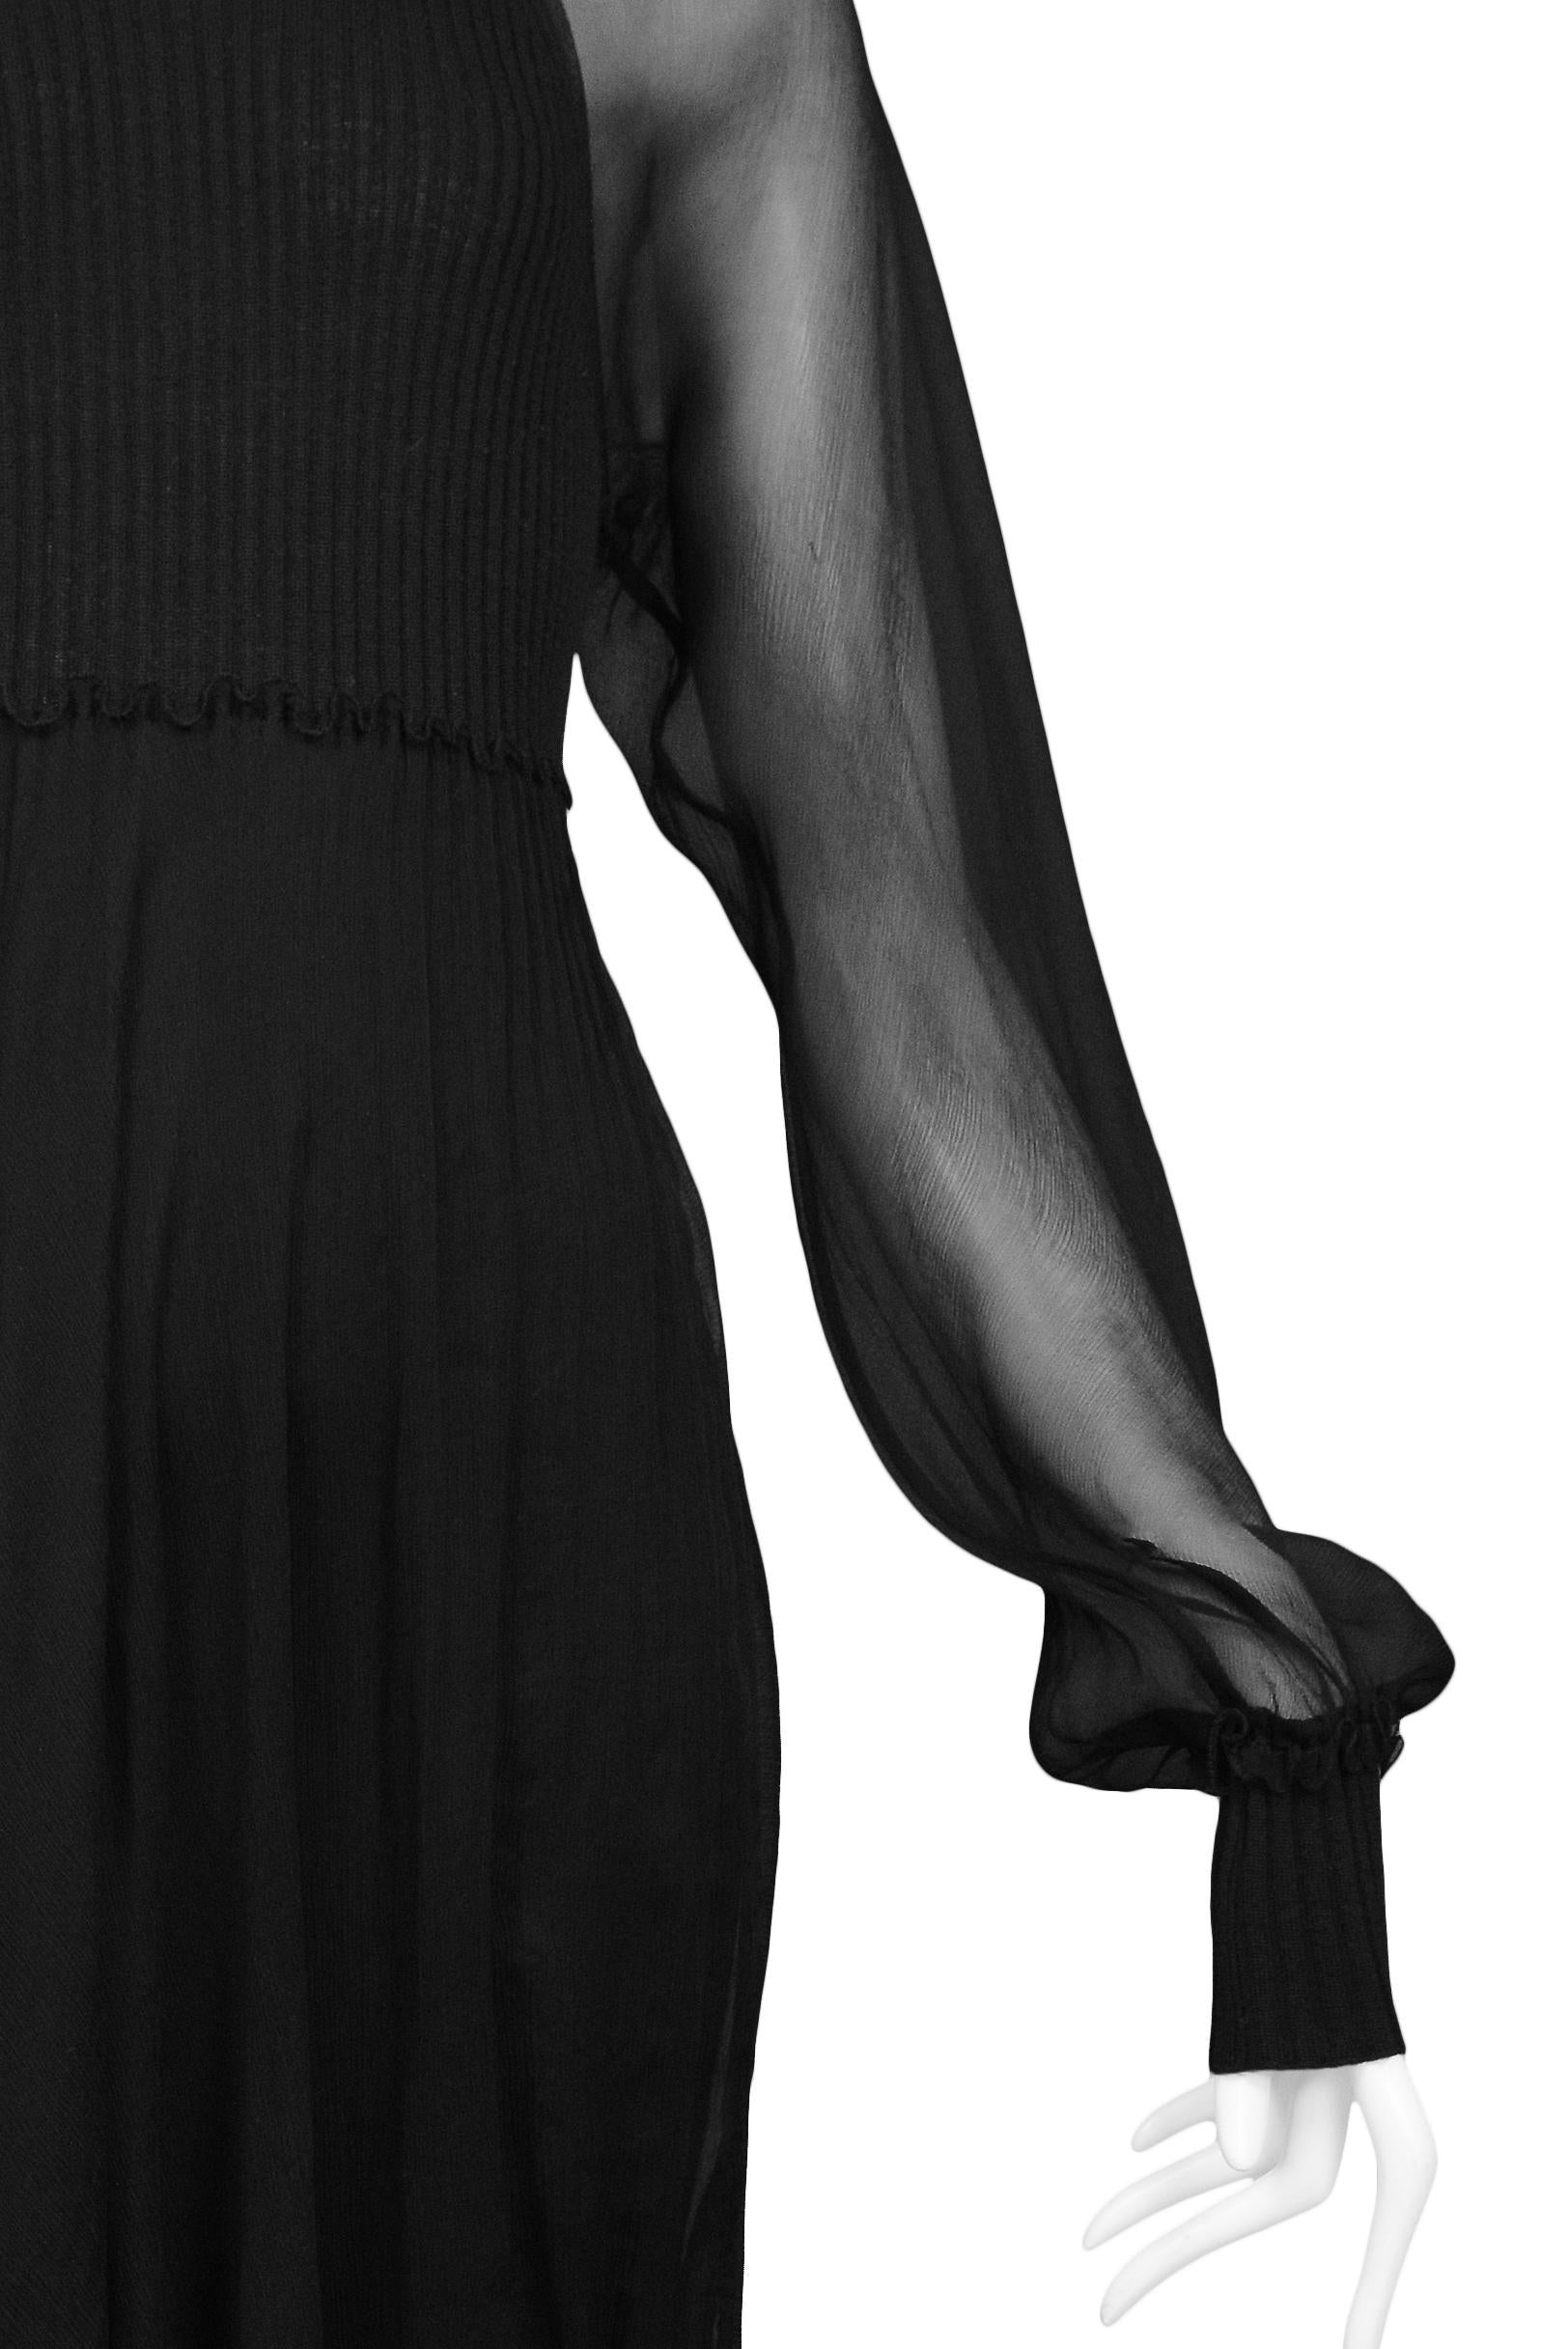 black dress with chiffon overlay